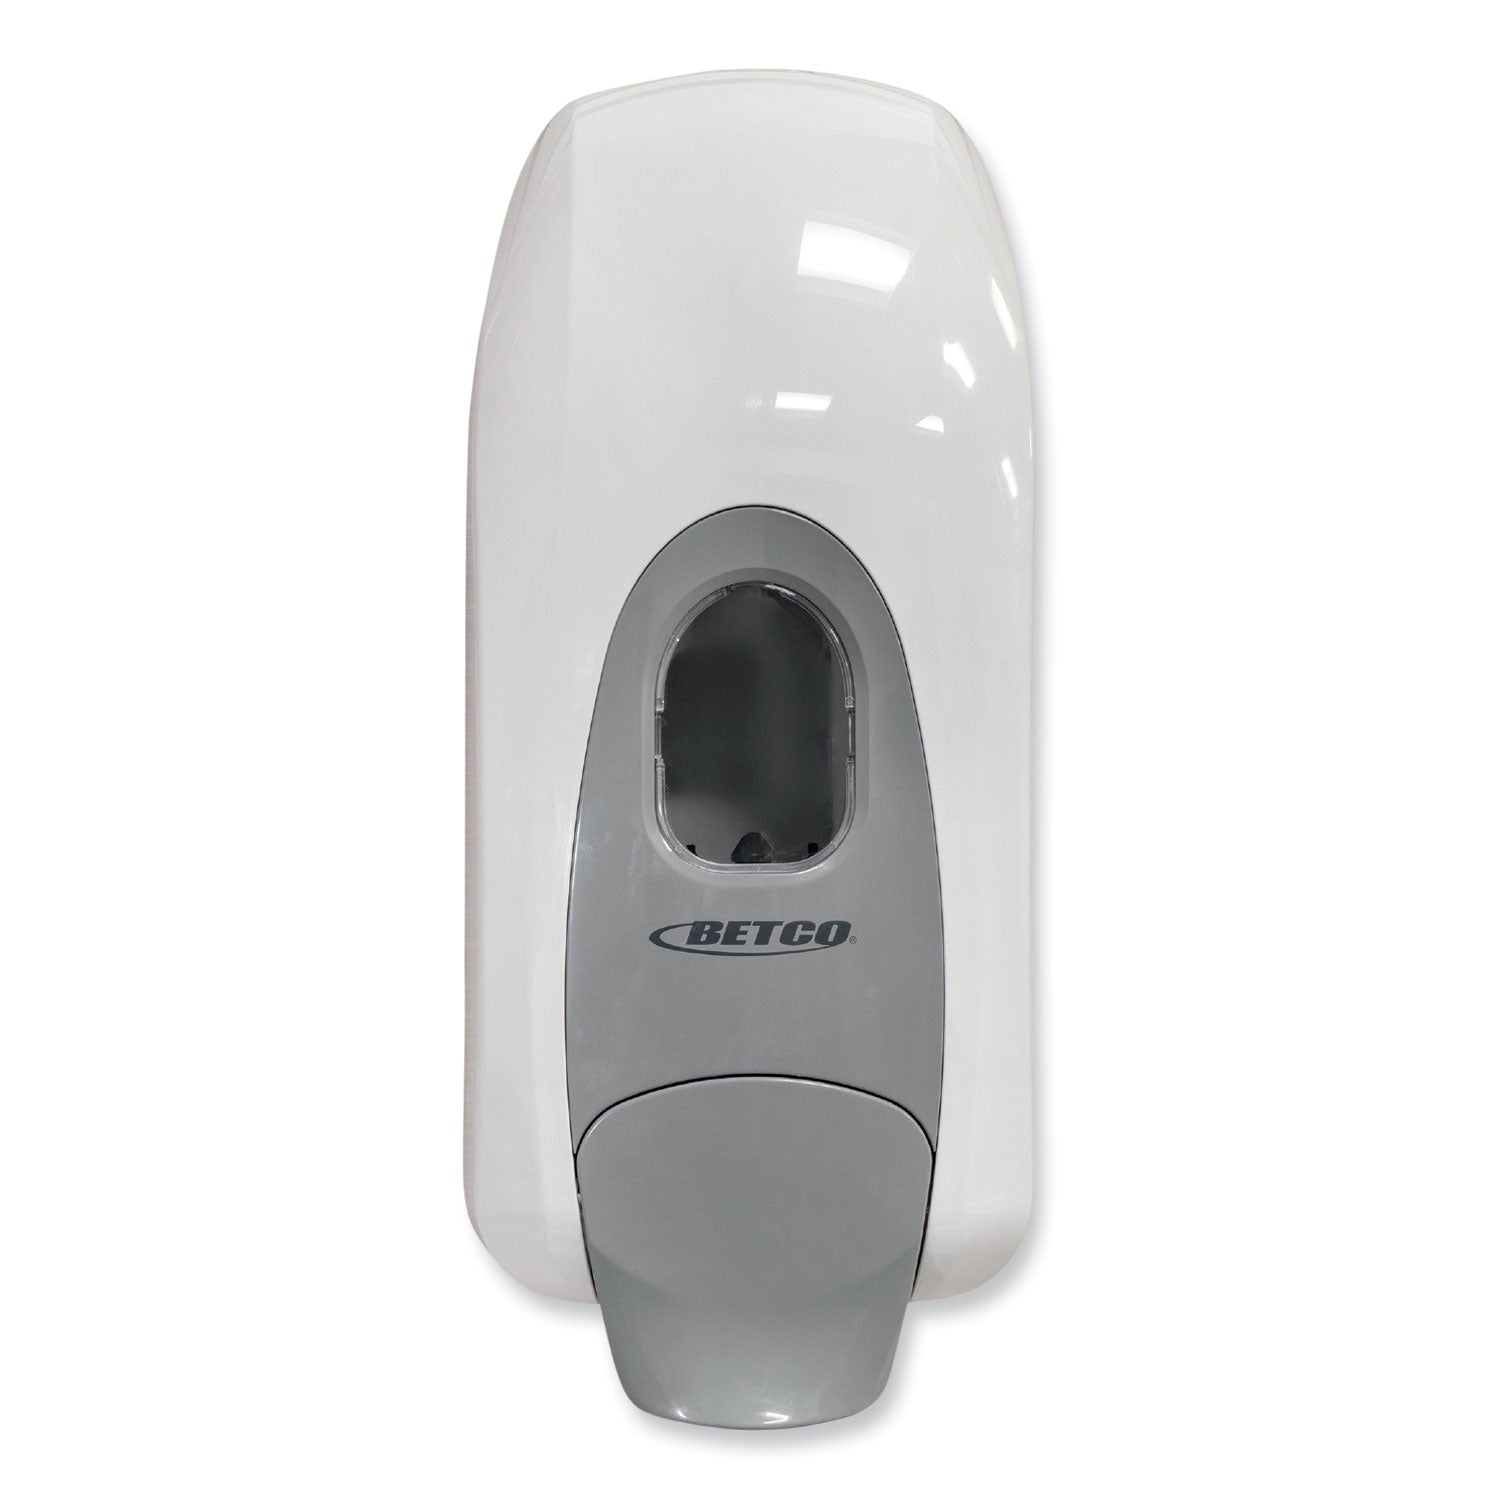 Betco Clario Manual Skin Care Foam Dispenser - Manual - 1.06 quart Capacity - Hygienic, Refillable, Site Window, Durable - White - 12 / Carton - 1